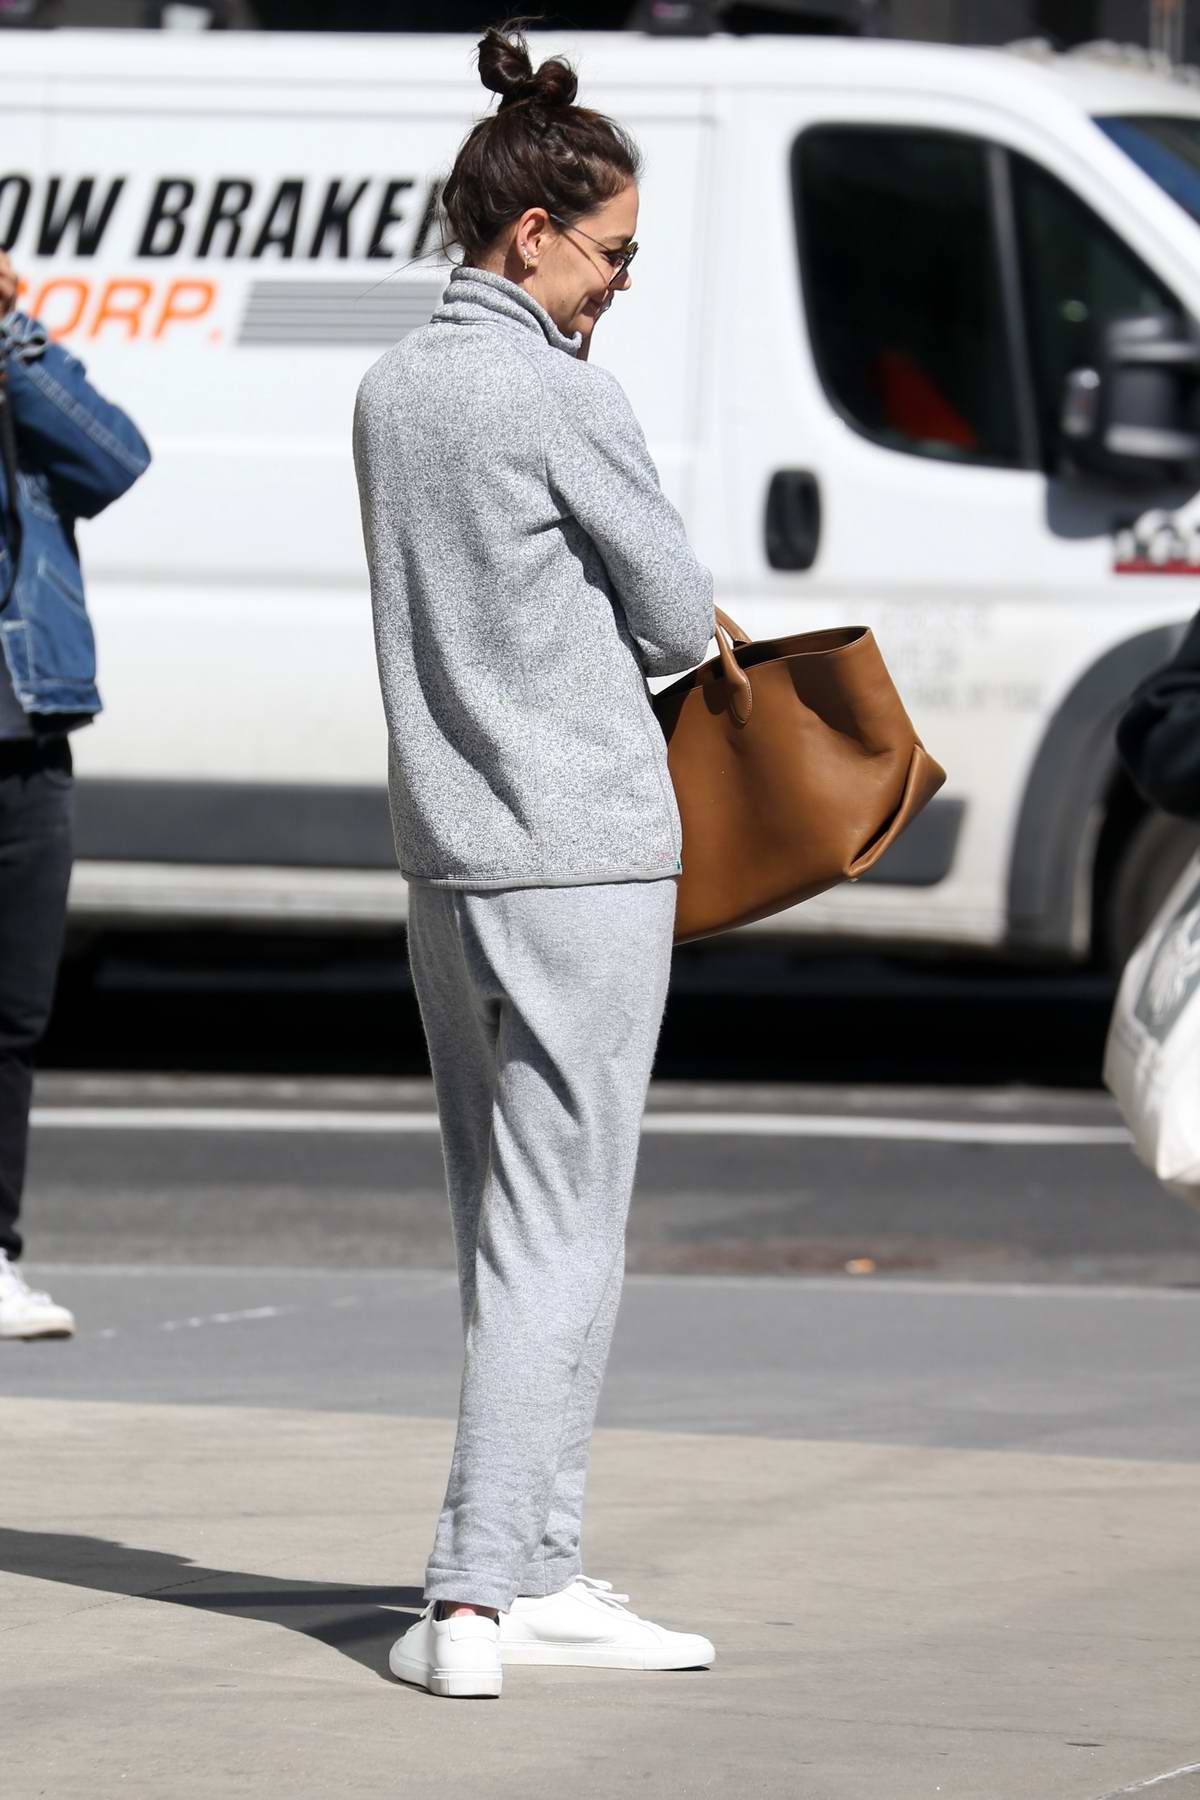 Katie Holmes Keeps It Casual In Her Grey Sweatsuit As She